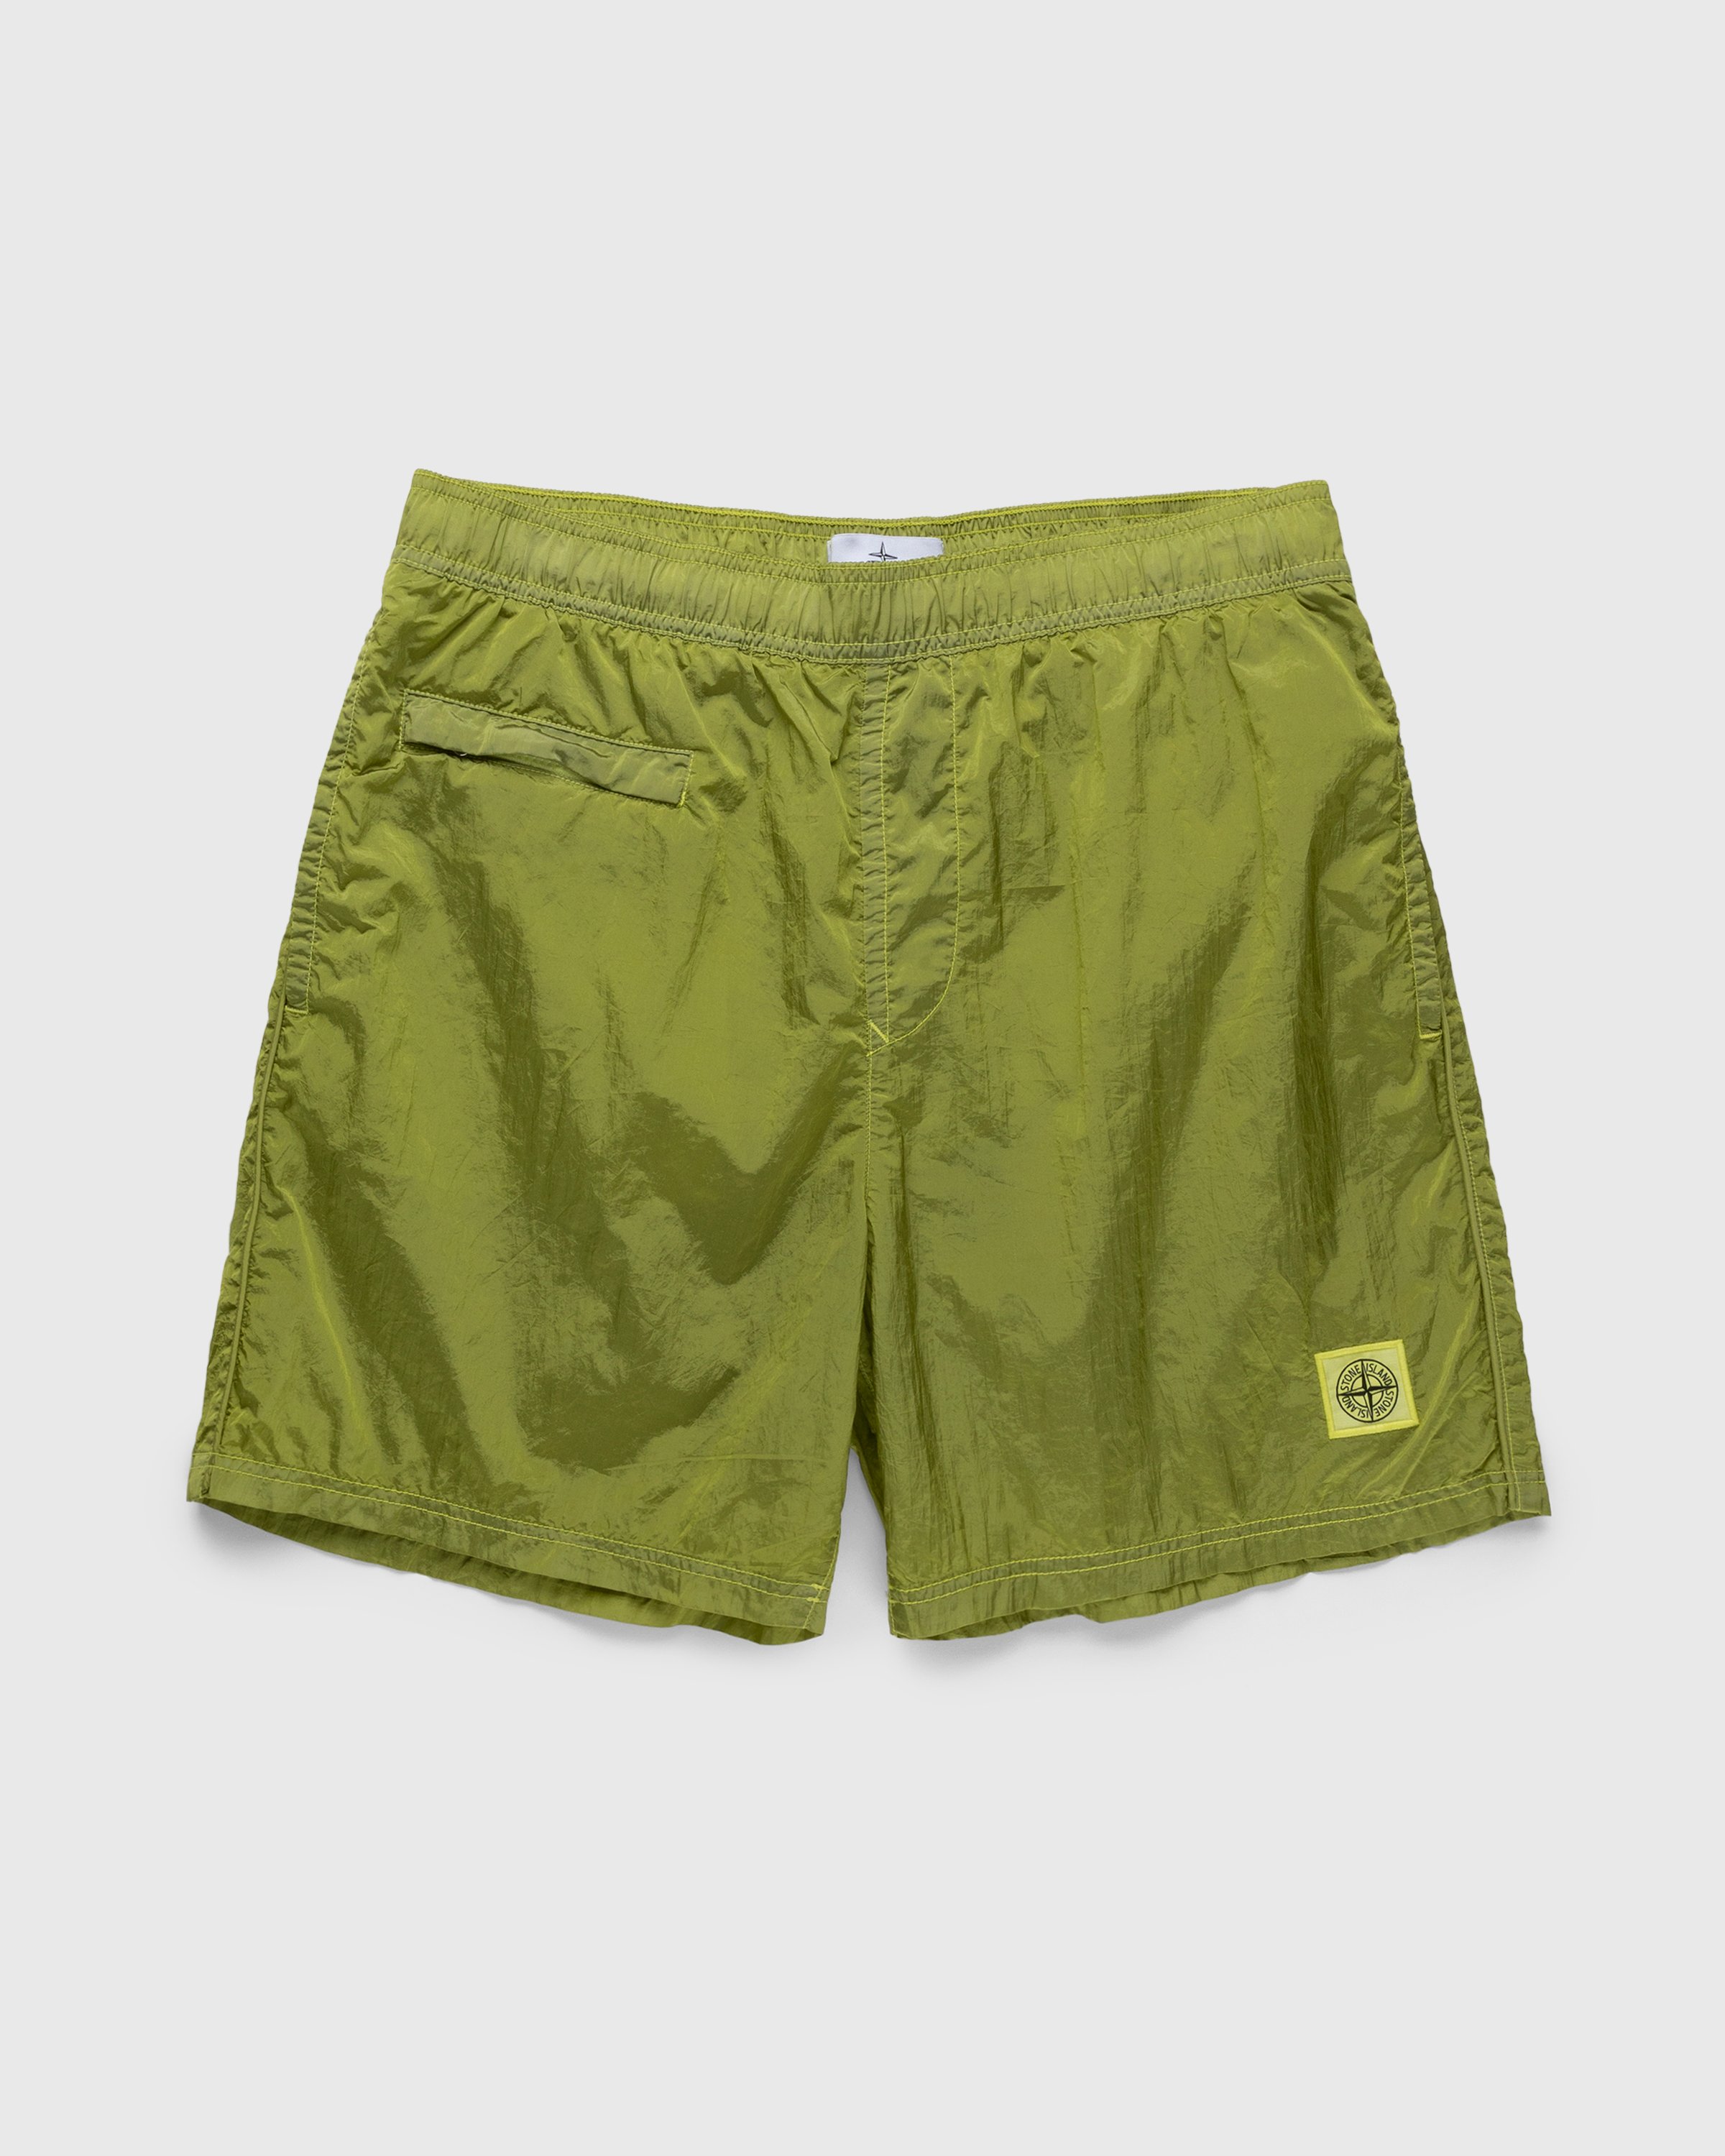 Stone Island - B0243 Nylon Metal Swim Shorts Lemon - Clothing - Yellow - Image 1